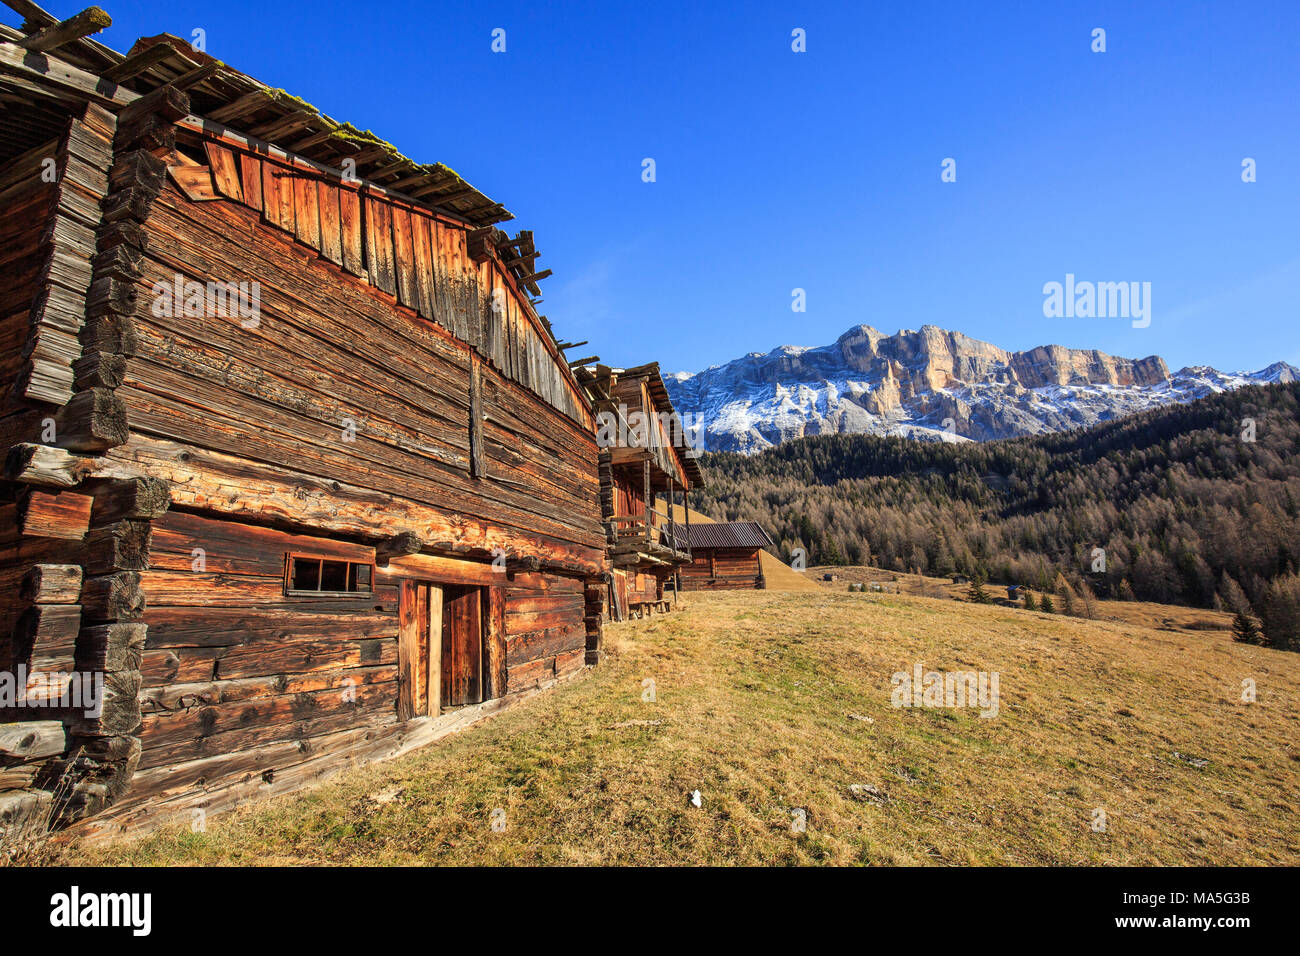 Chalet in Badia valley, in the background Sas dla Crusc mountain. Italy, Trentino Alto Adige, Sudtirol Stock Photo